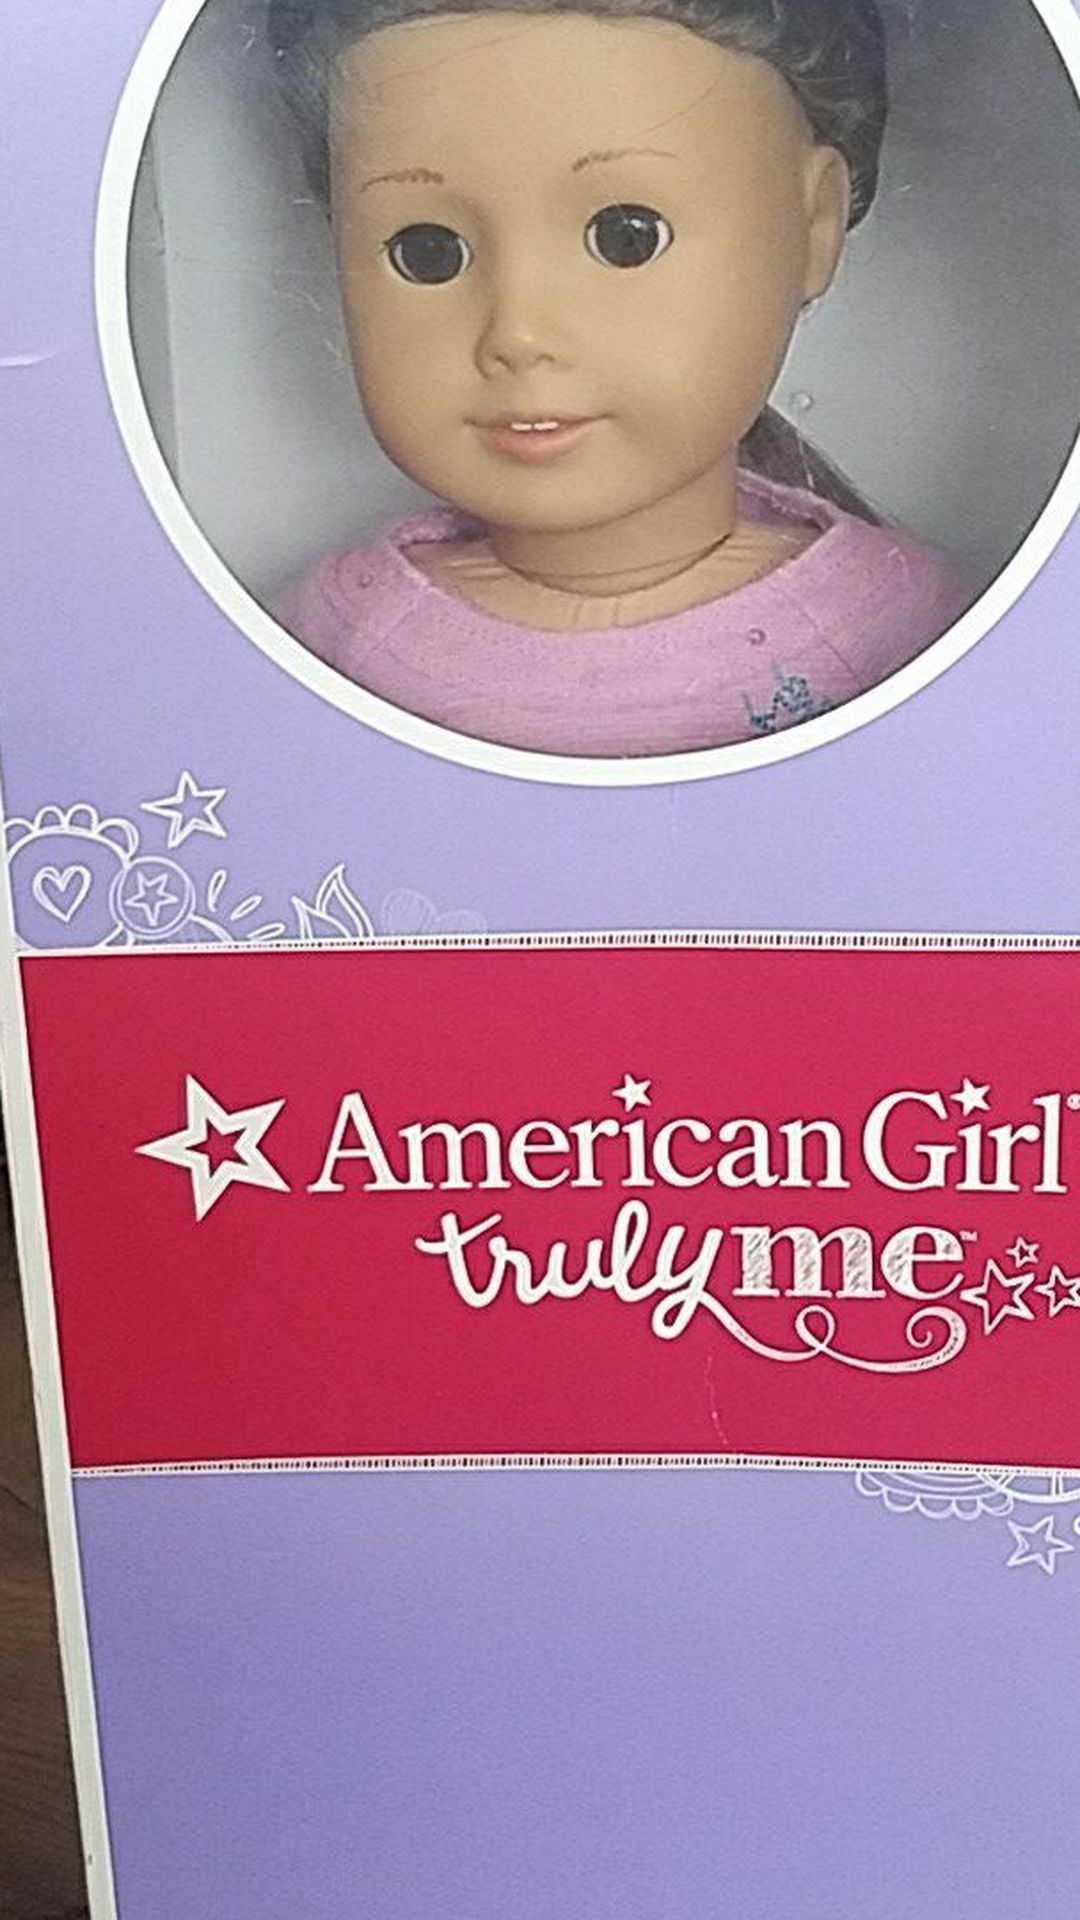 American Girl doll #59 truly me!